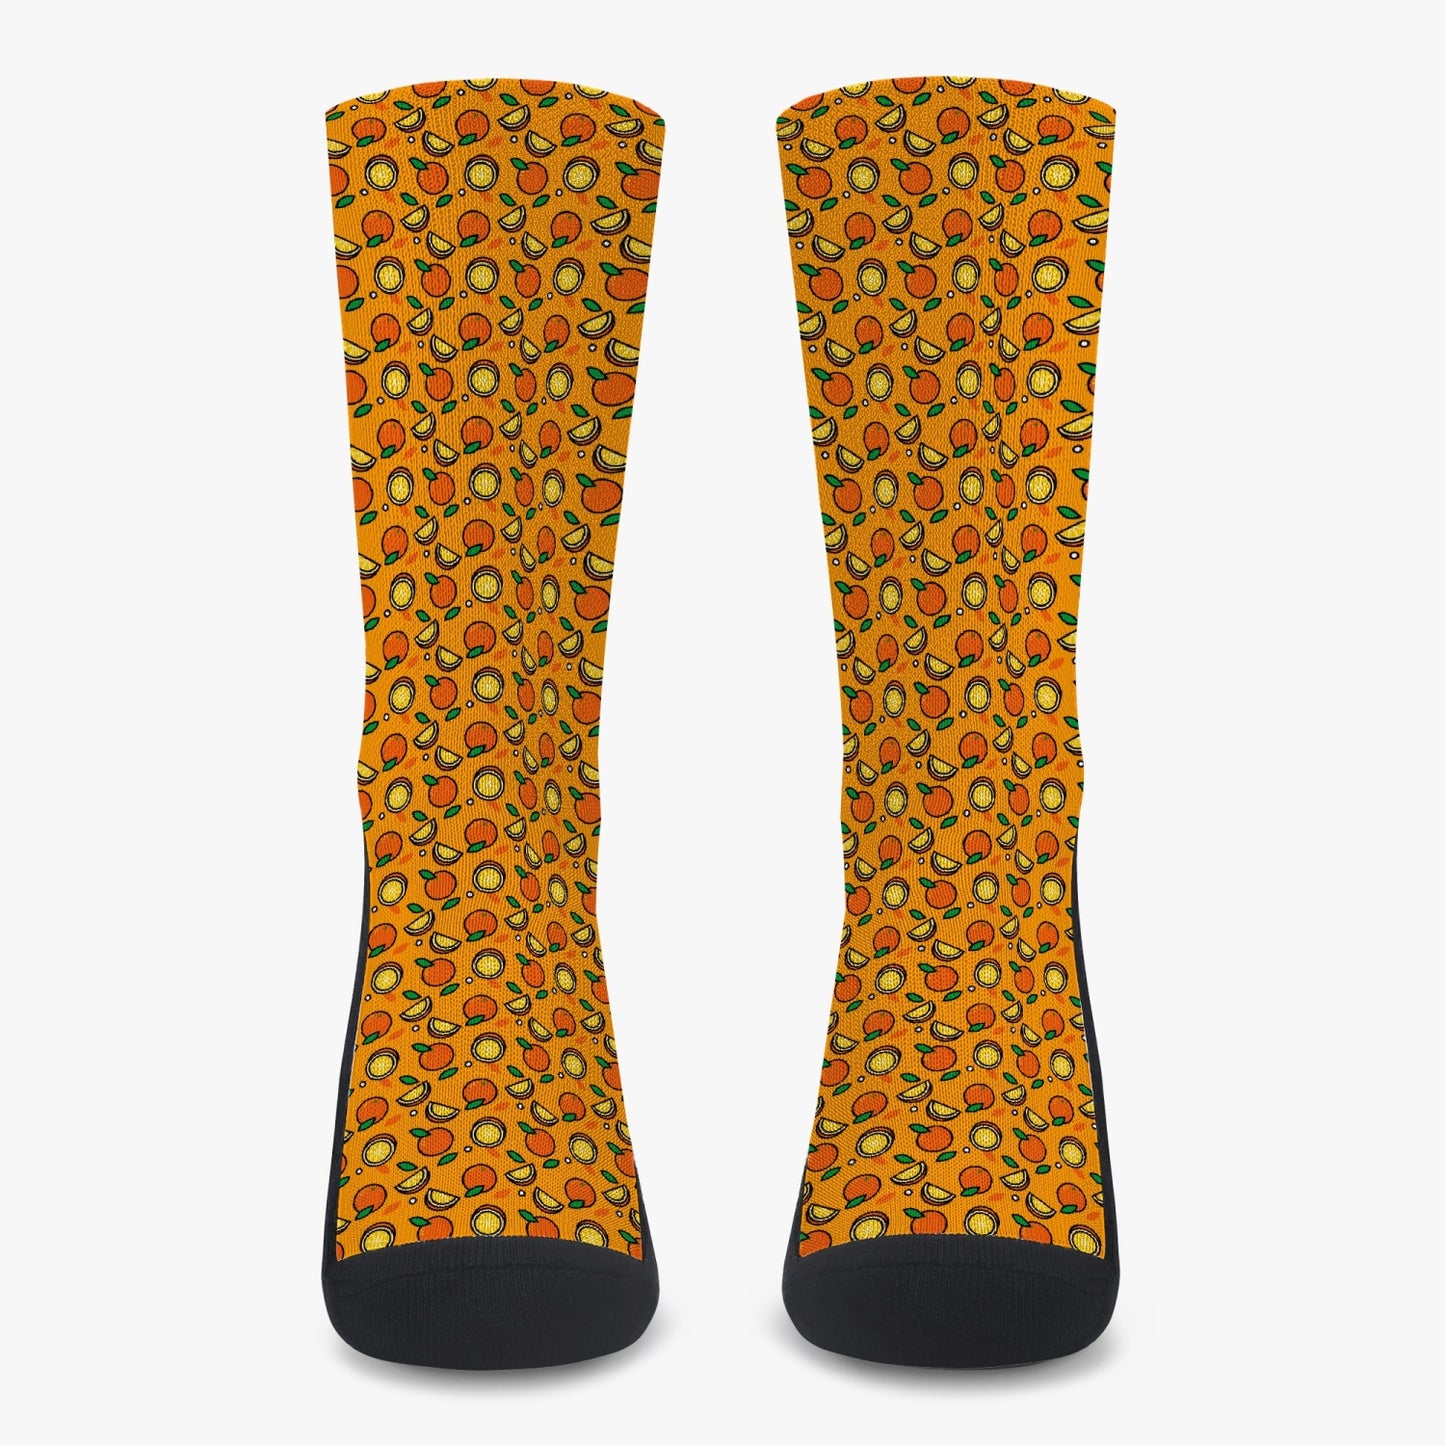 🍊 Orange Flavorful Socks